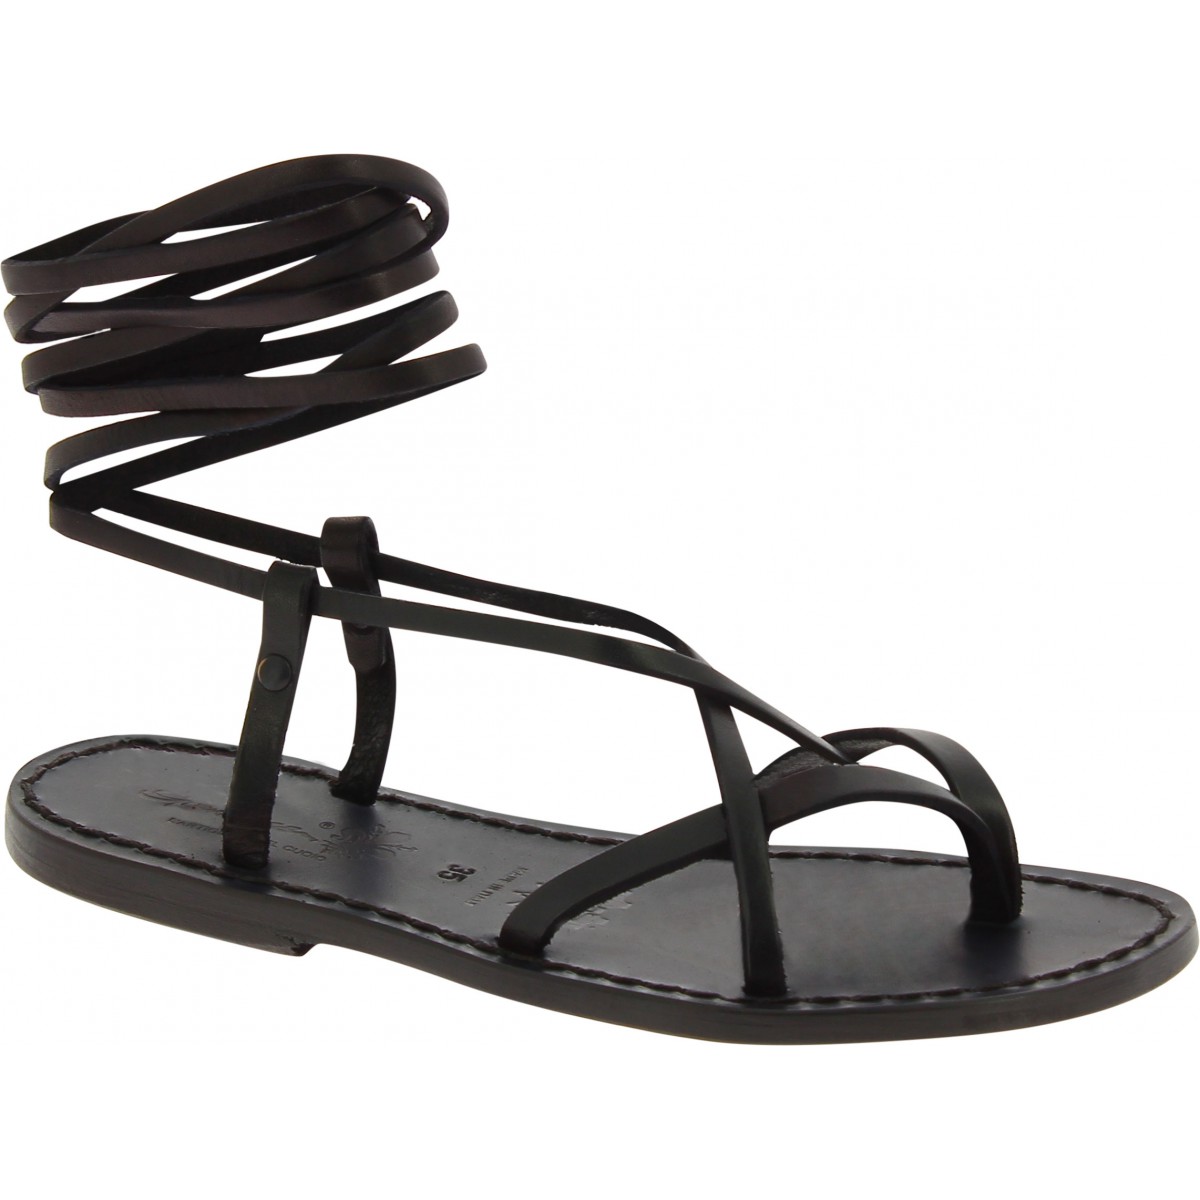 Buy black flat sandals for ladies cheap online